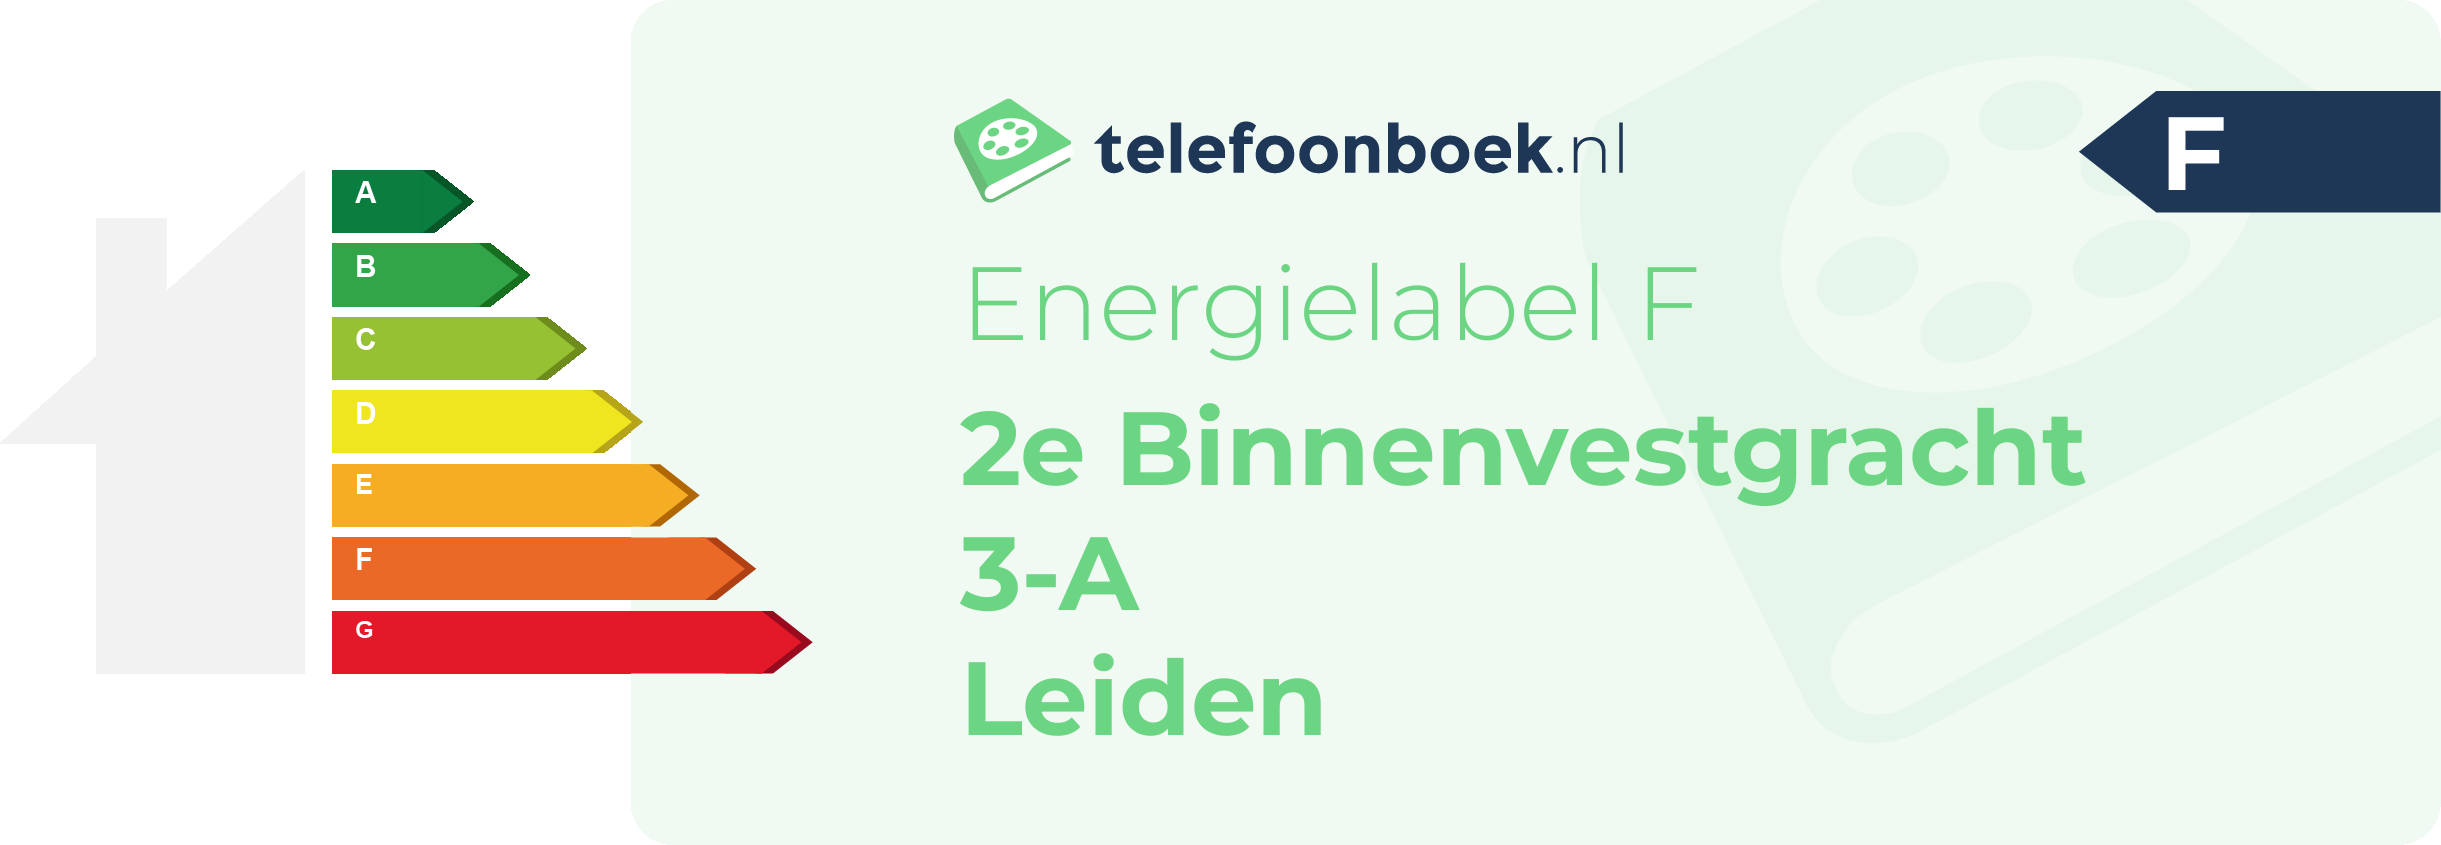 Energielabel 2e Binnenvestgracht 3-A Leiden